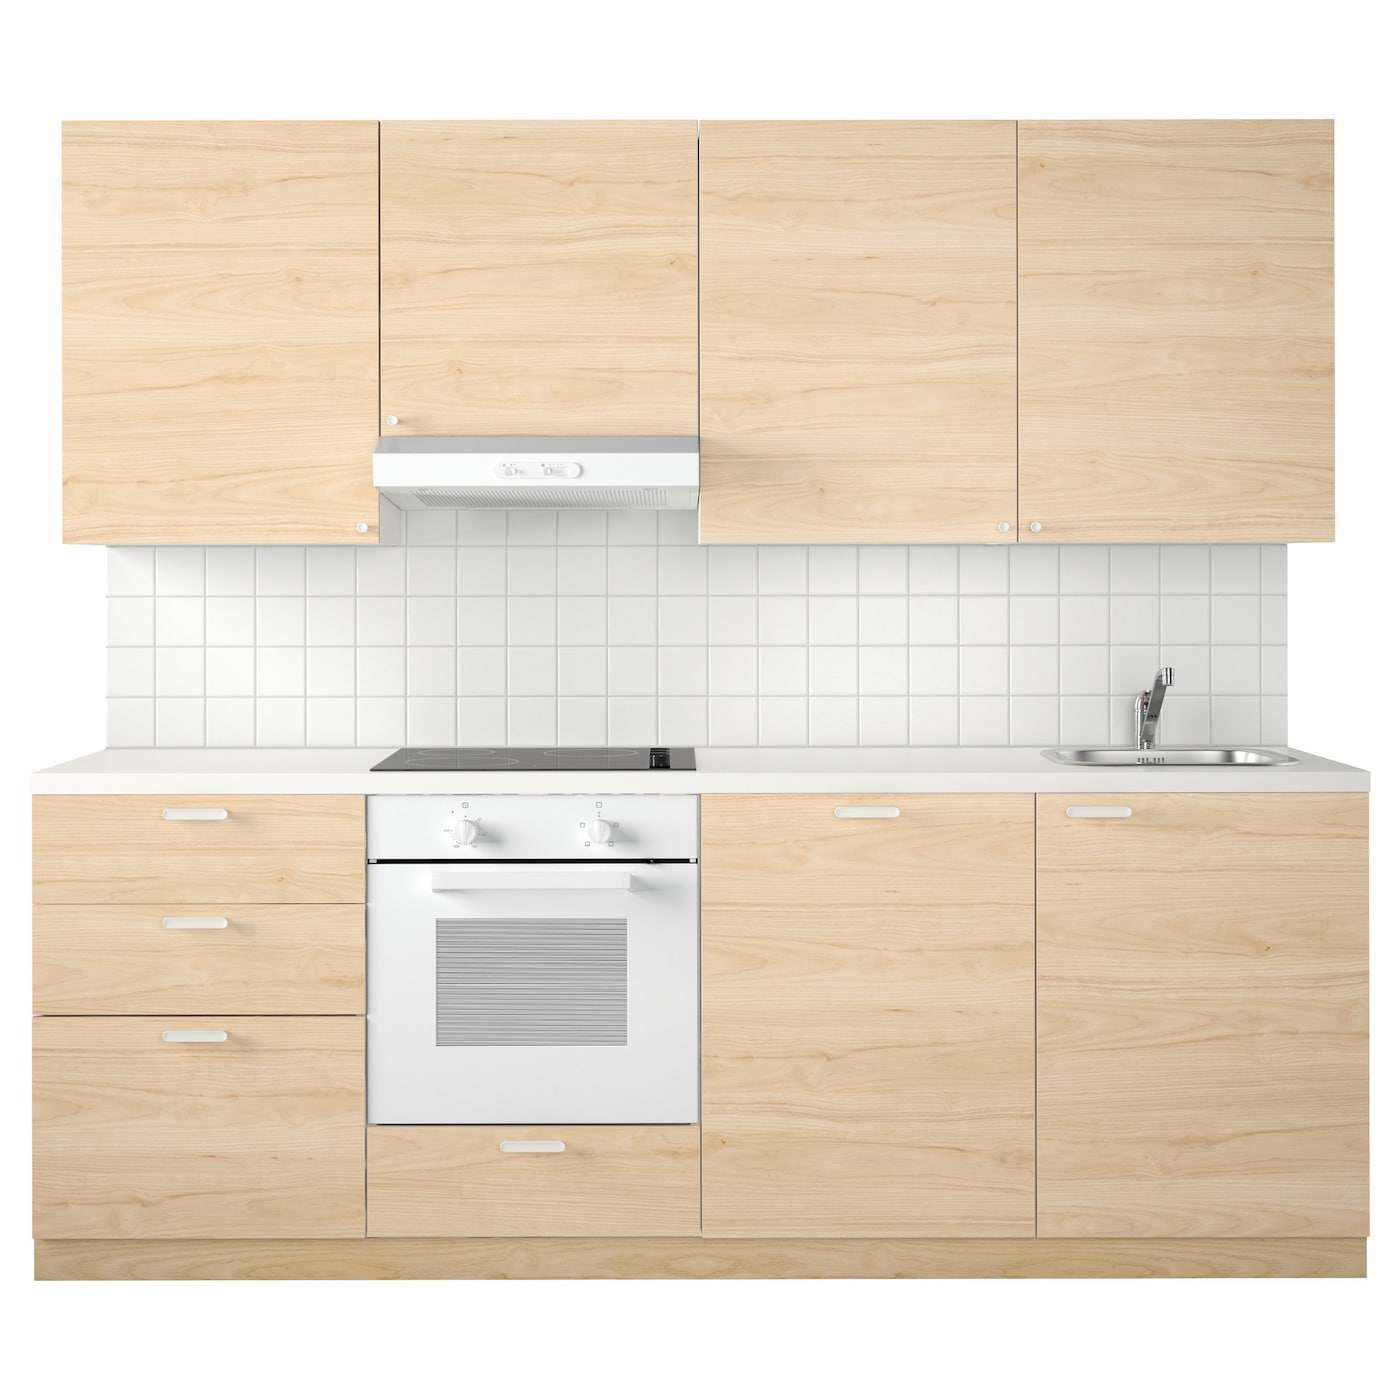 Модульный шкаф - METOD IKEA/ МЕТОД ИКЕА, 228х240 см, под беленый дуб /белый